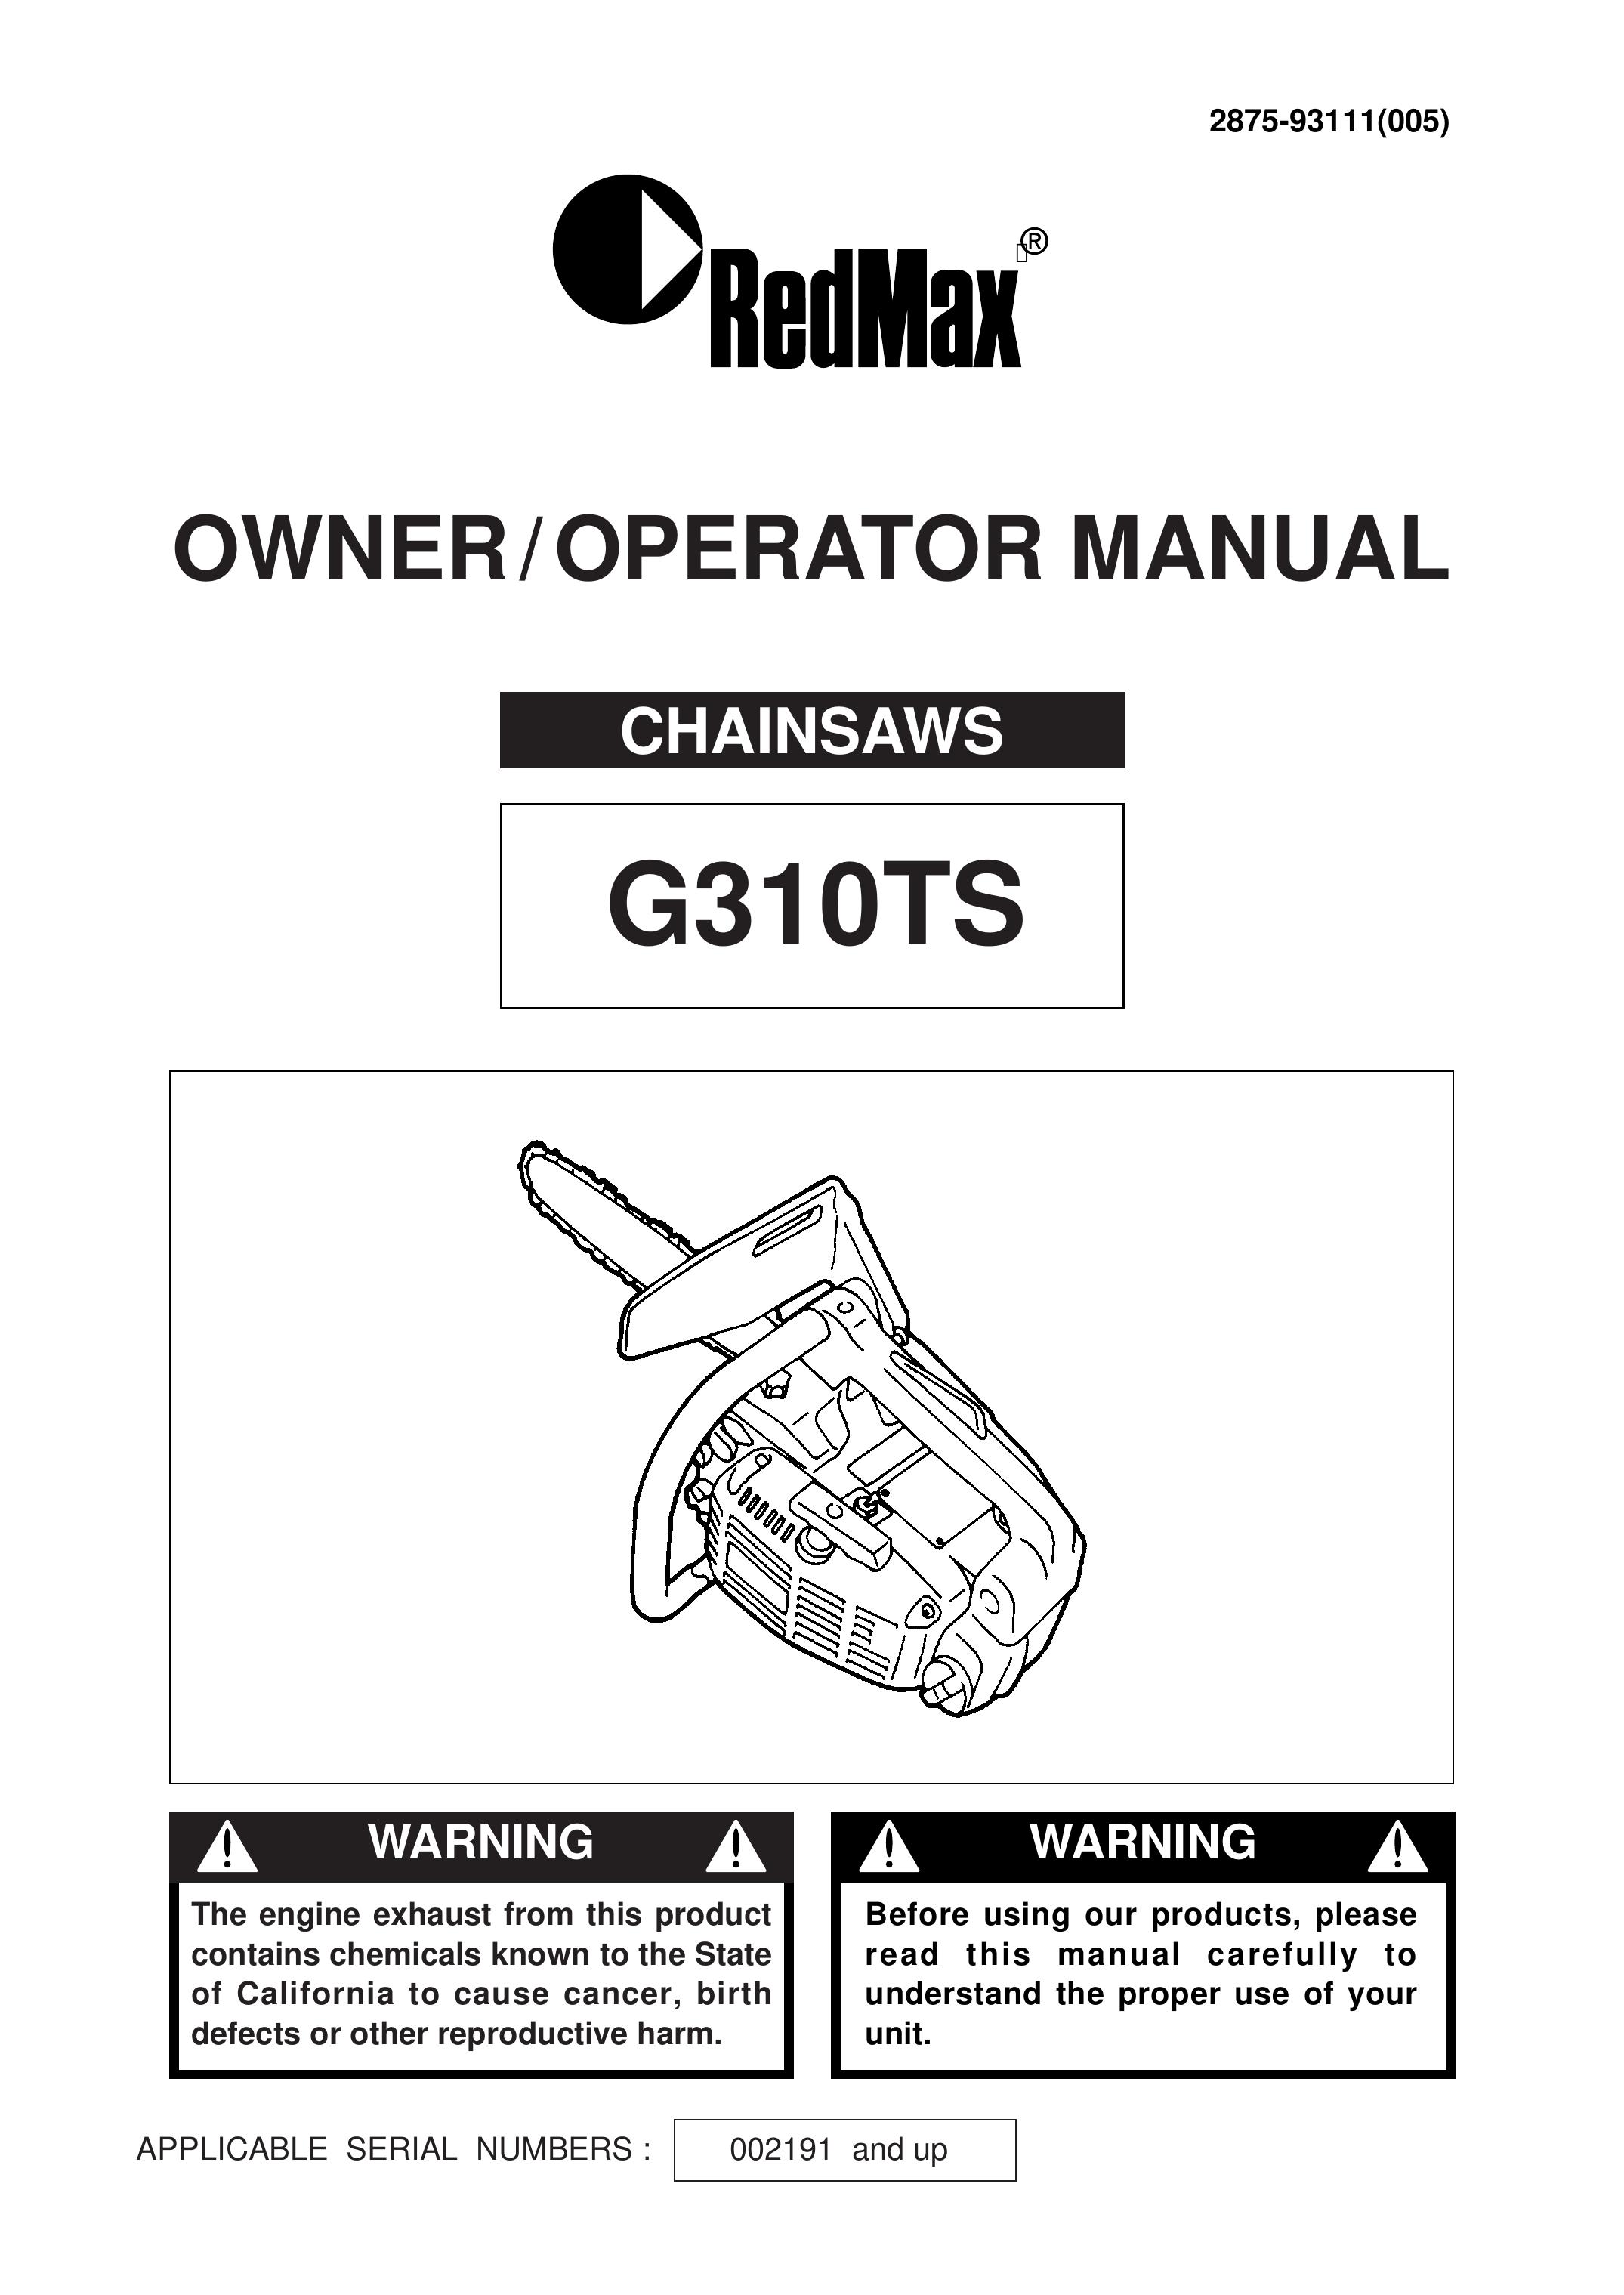 RedMax G310TS Chainsaw User Manual